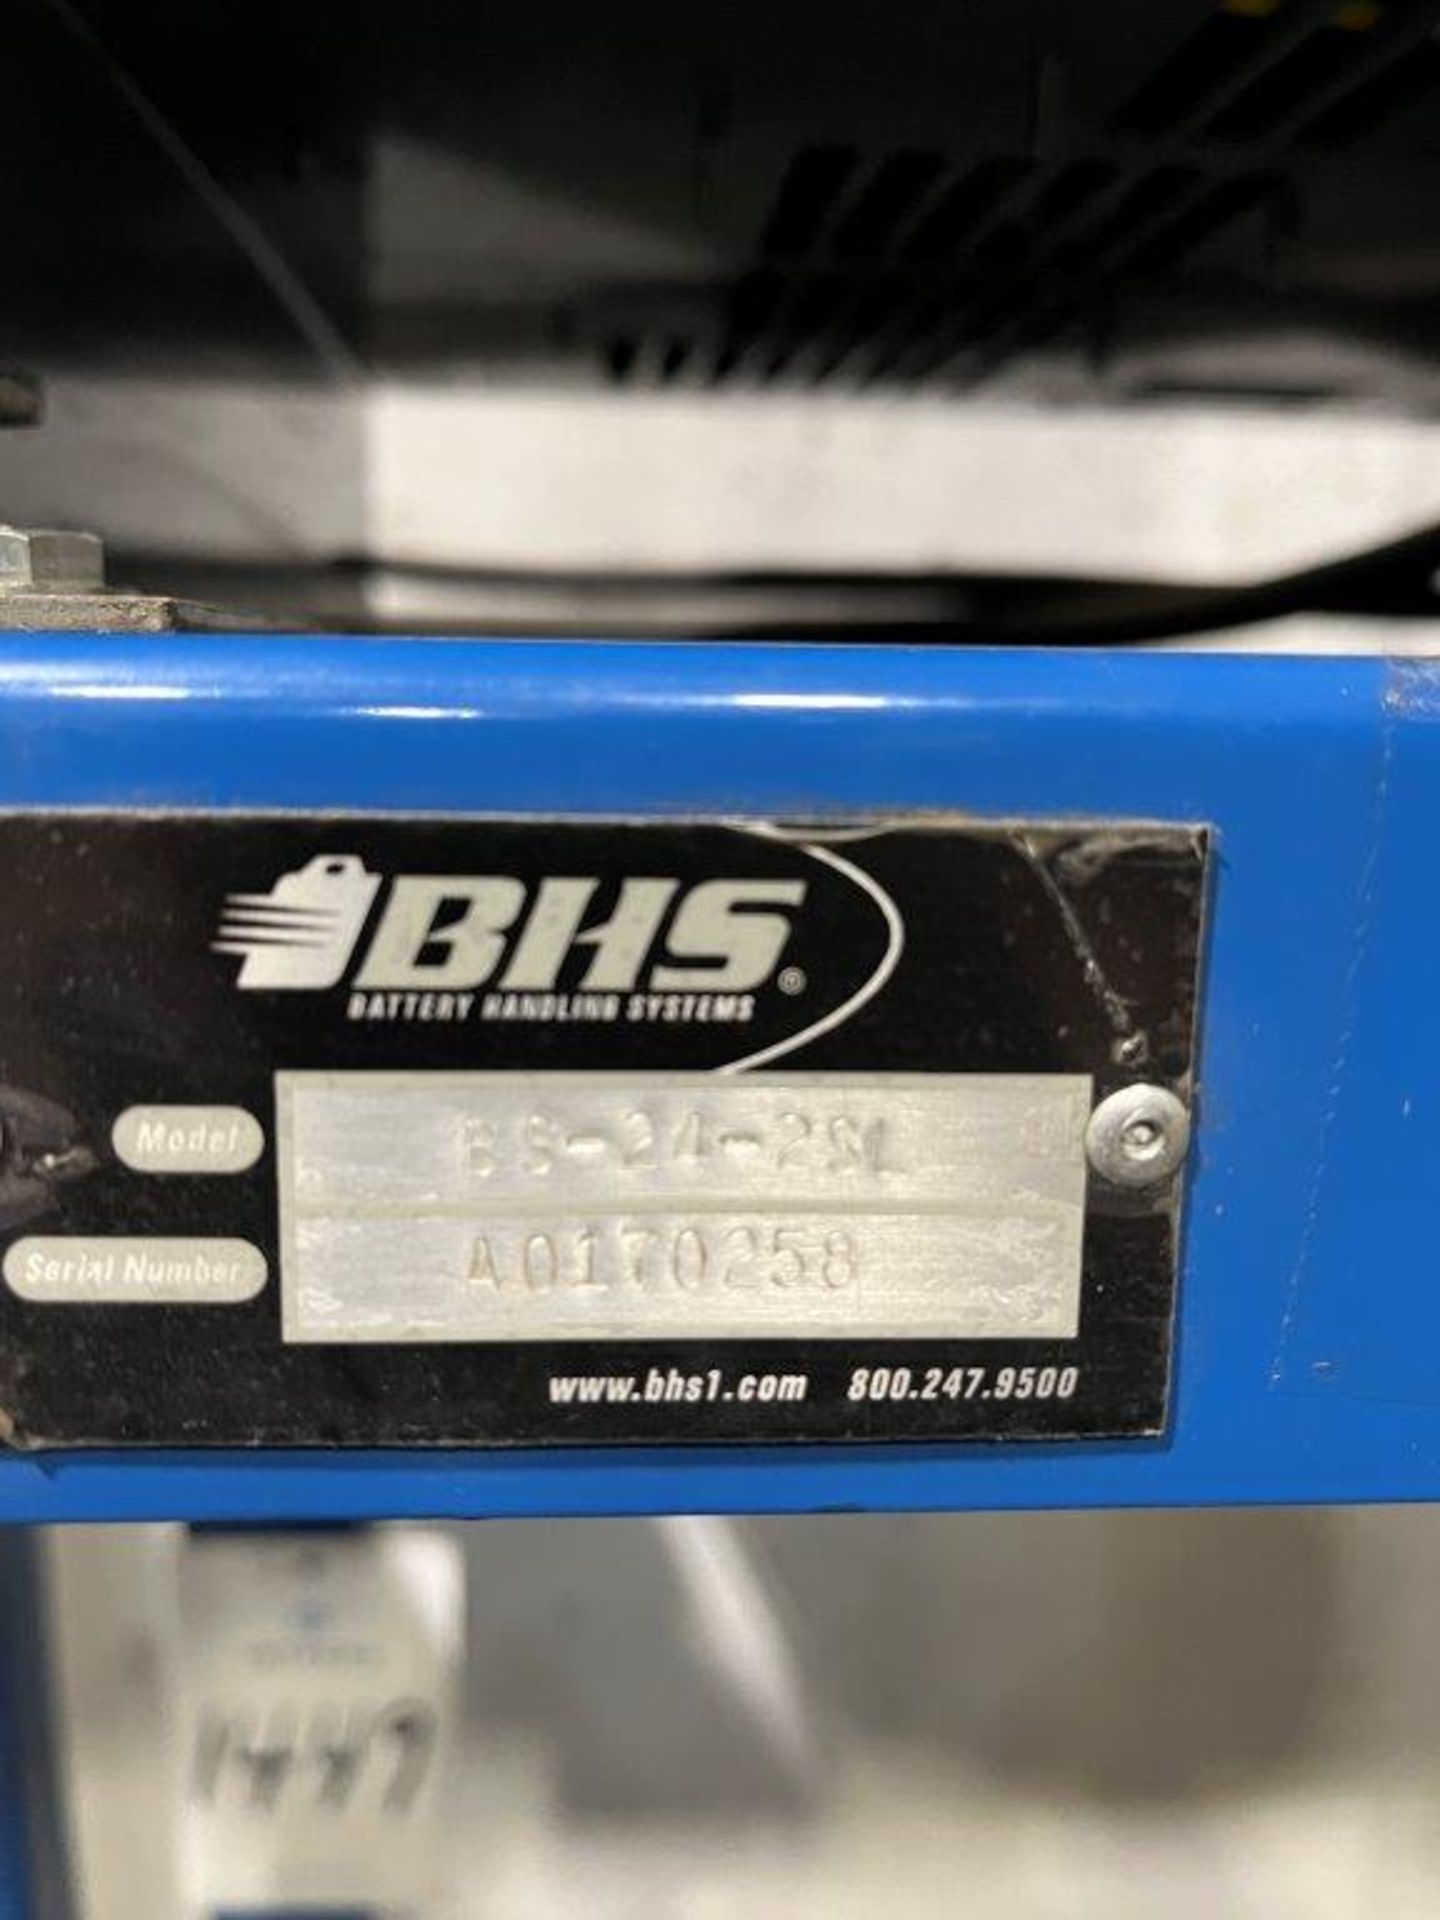 BHS BS-24-2SL Battery Storage Rack - Image 2 of 2